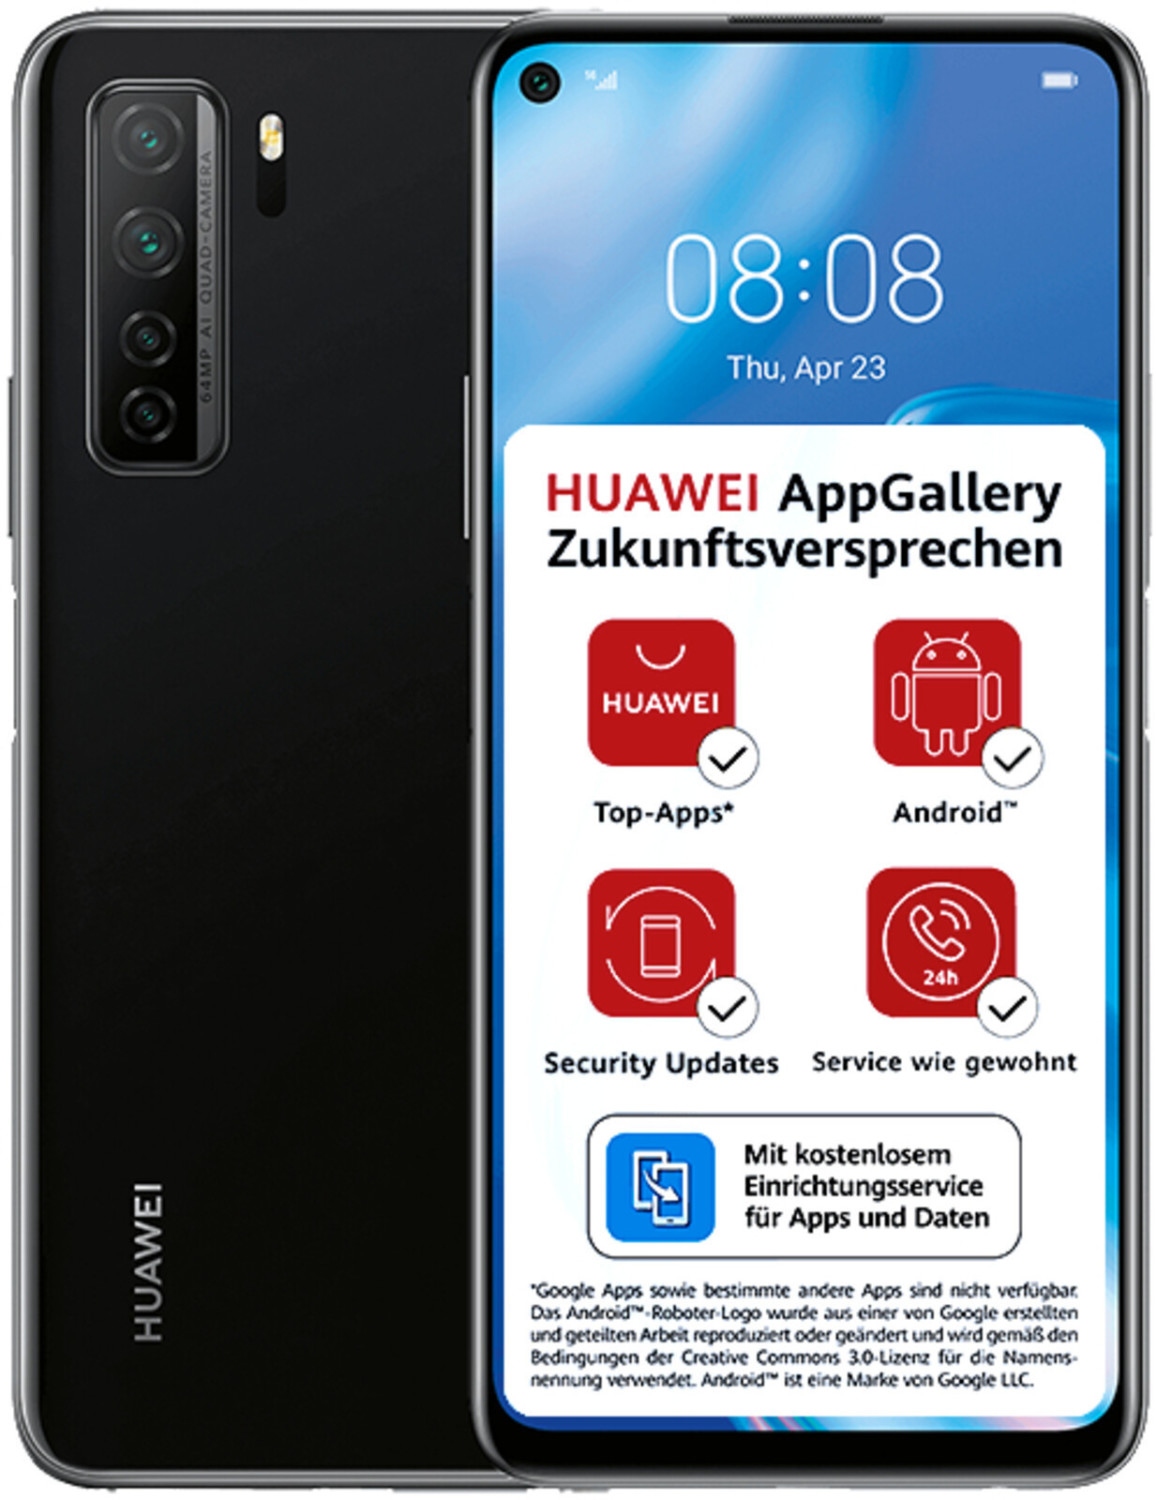 Huawei P40 lite 5G desde 259,00 €